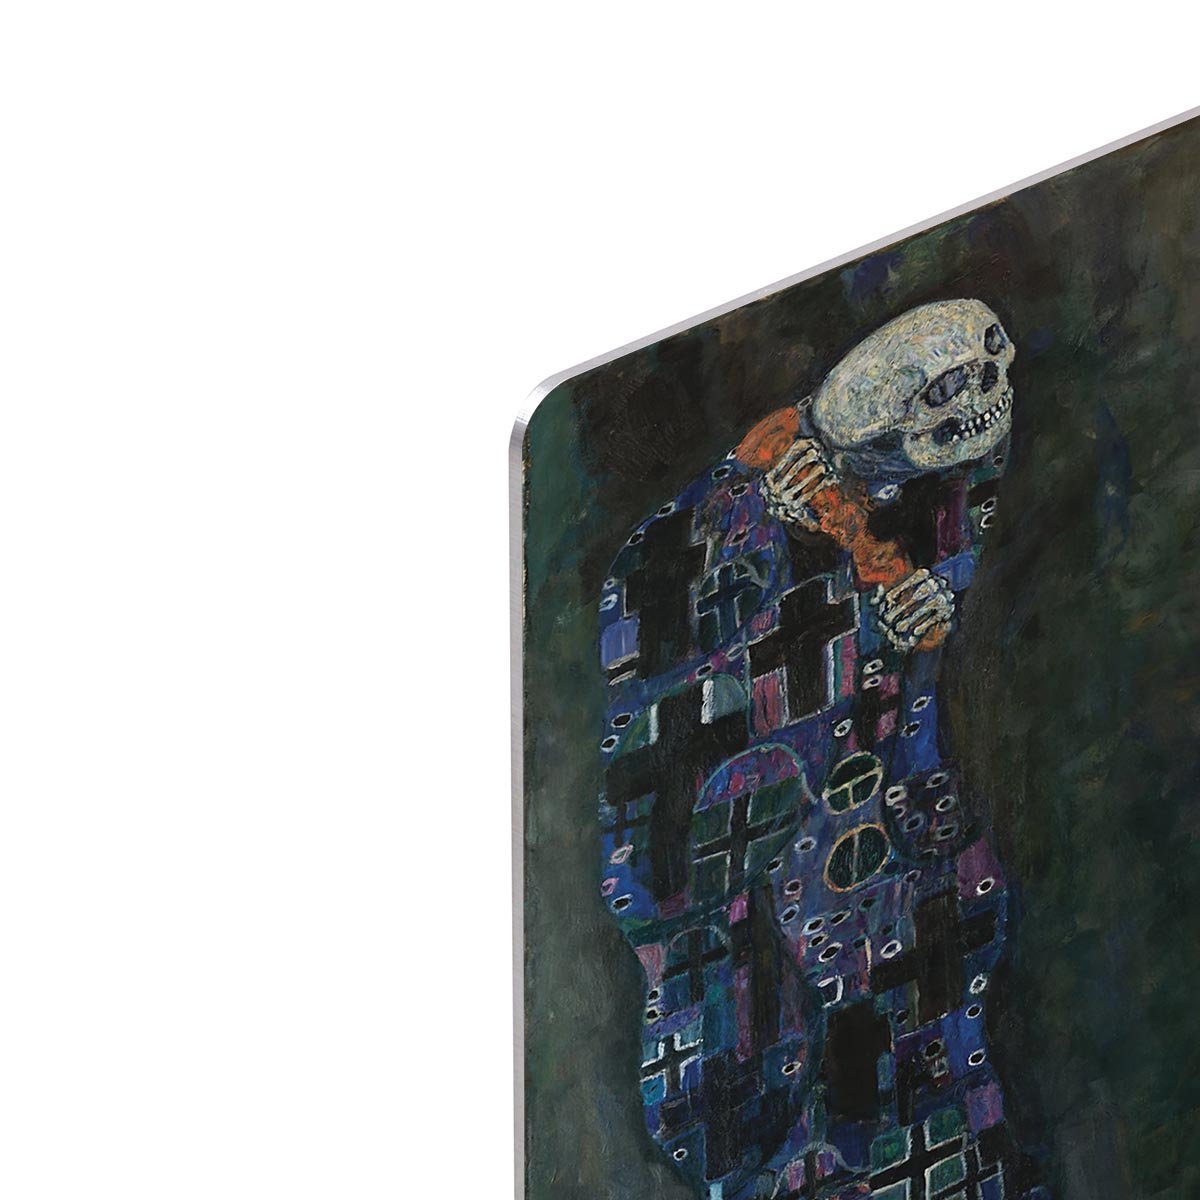 Death and Life by Klimt 2 HD Metal Print